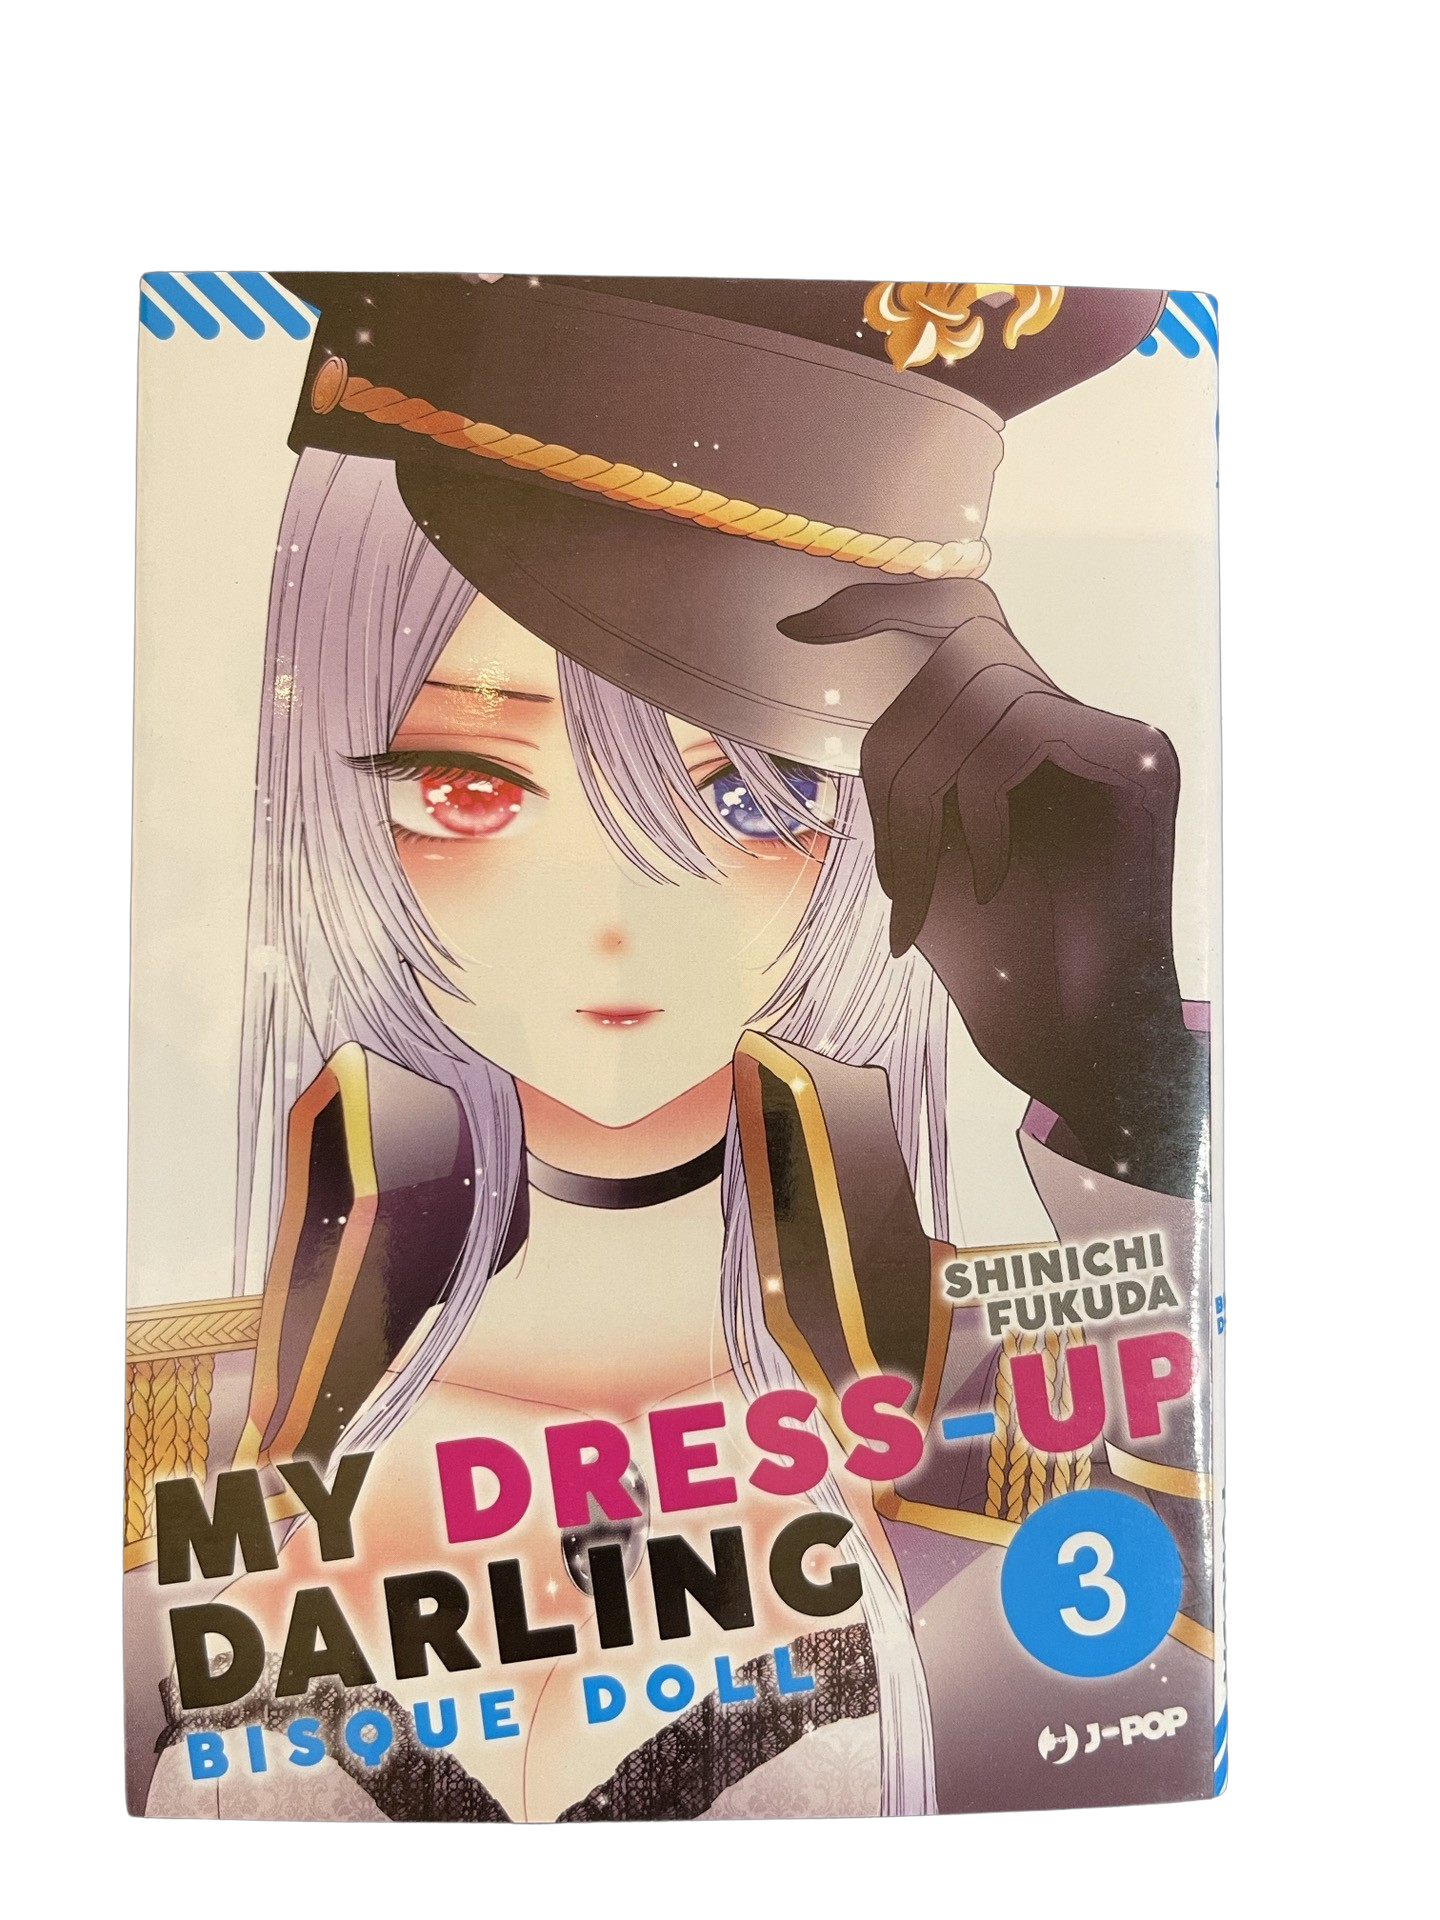 My Dress-Up Darling Vol. 3